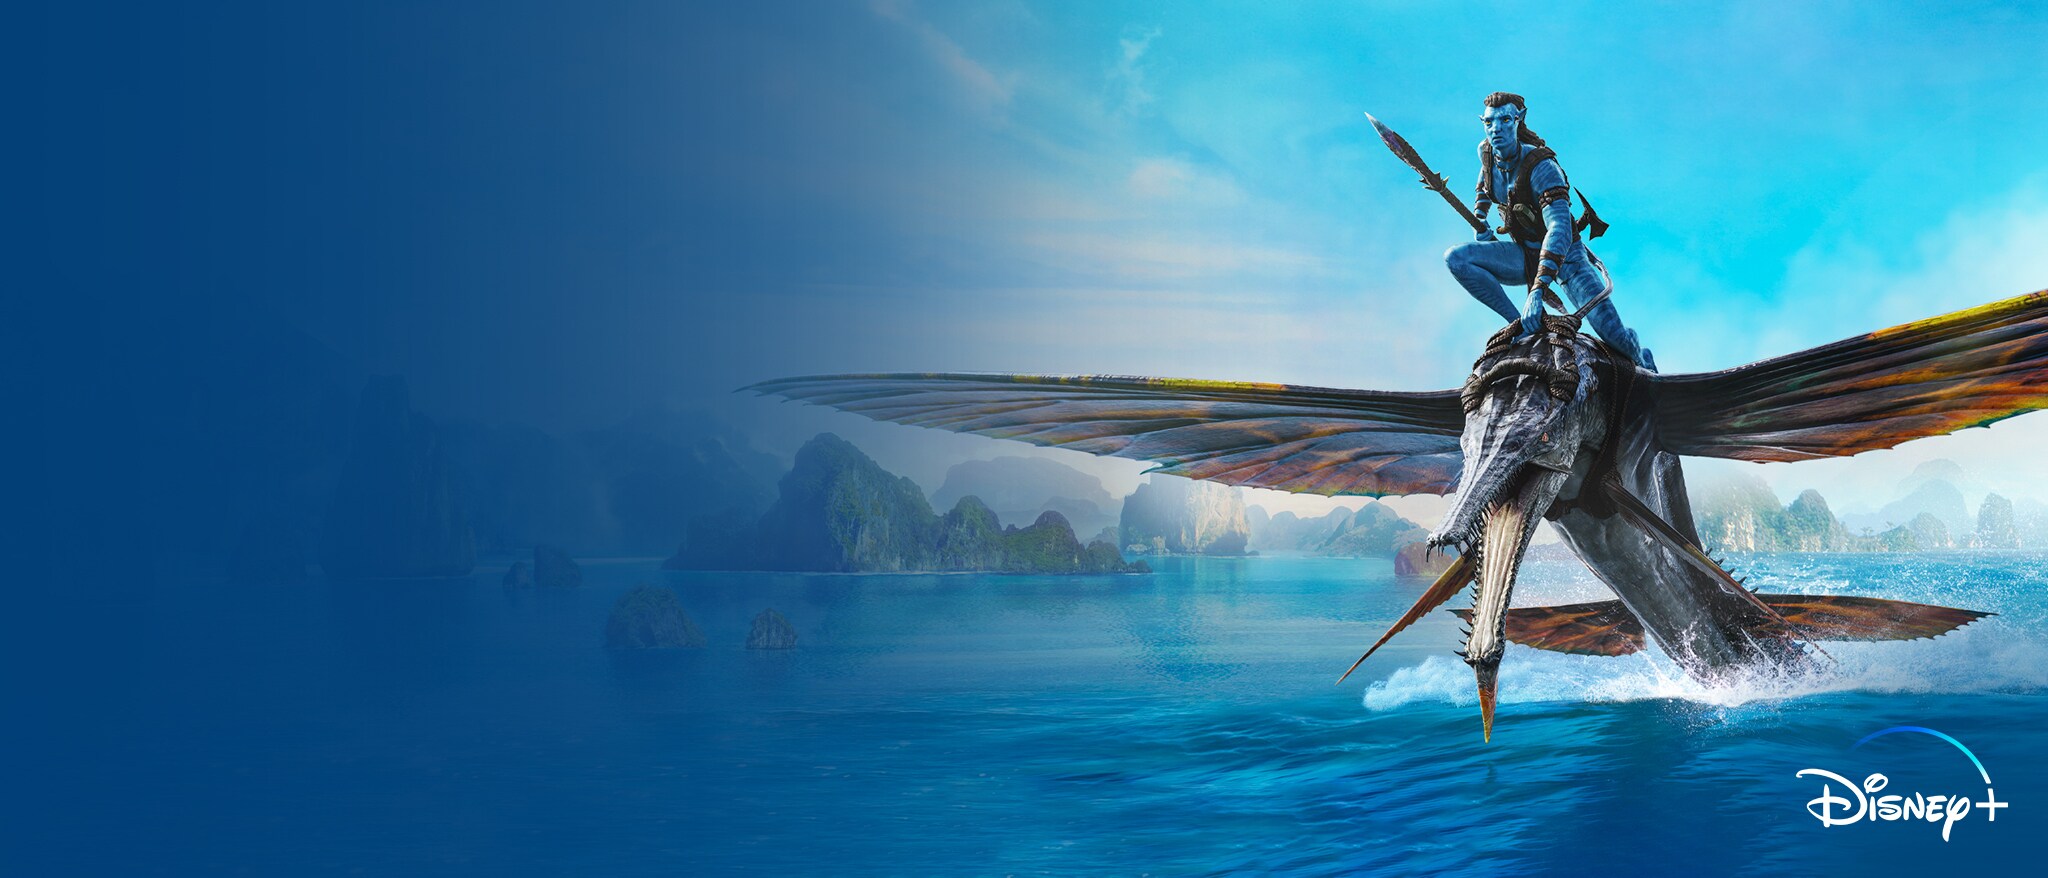 Hero - Disney+ - Avatar: The Way of Water Now Streaming